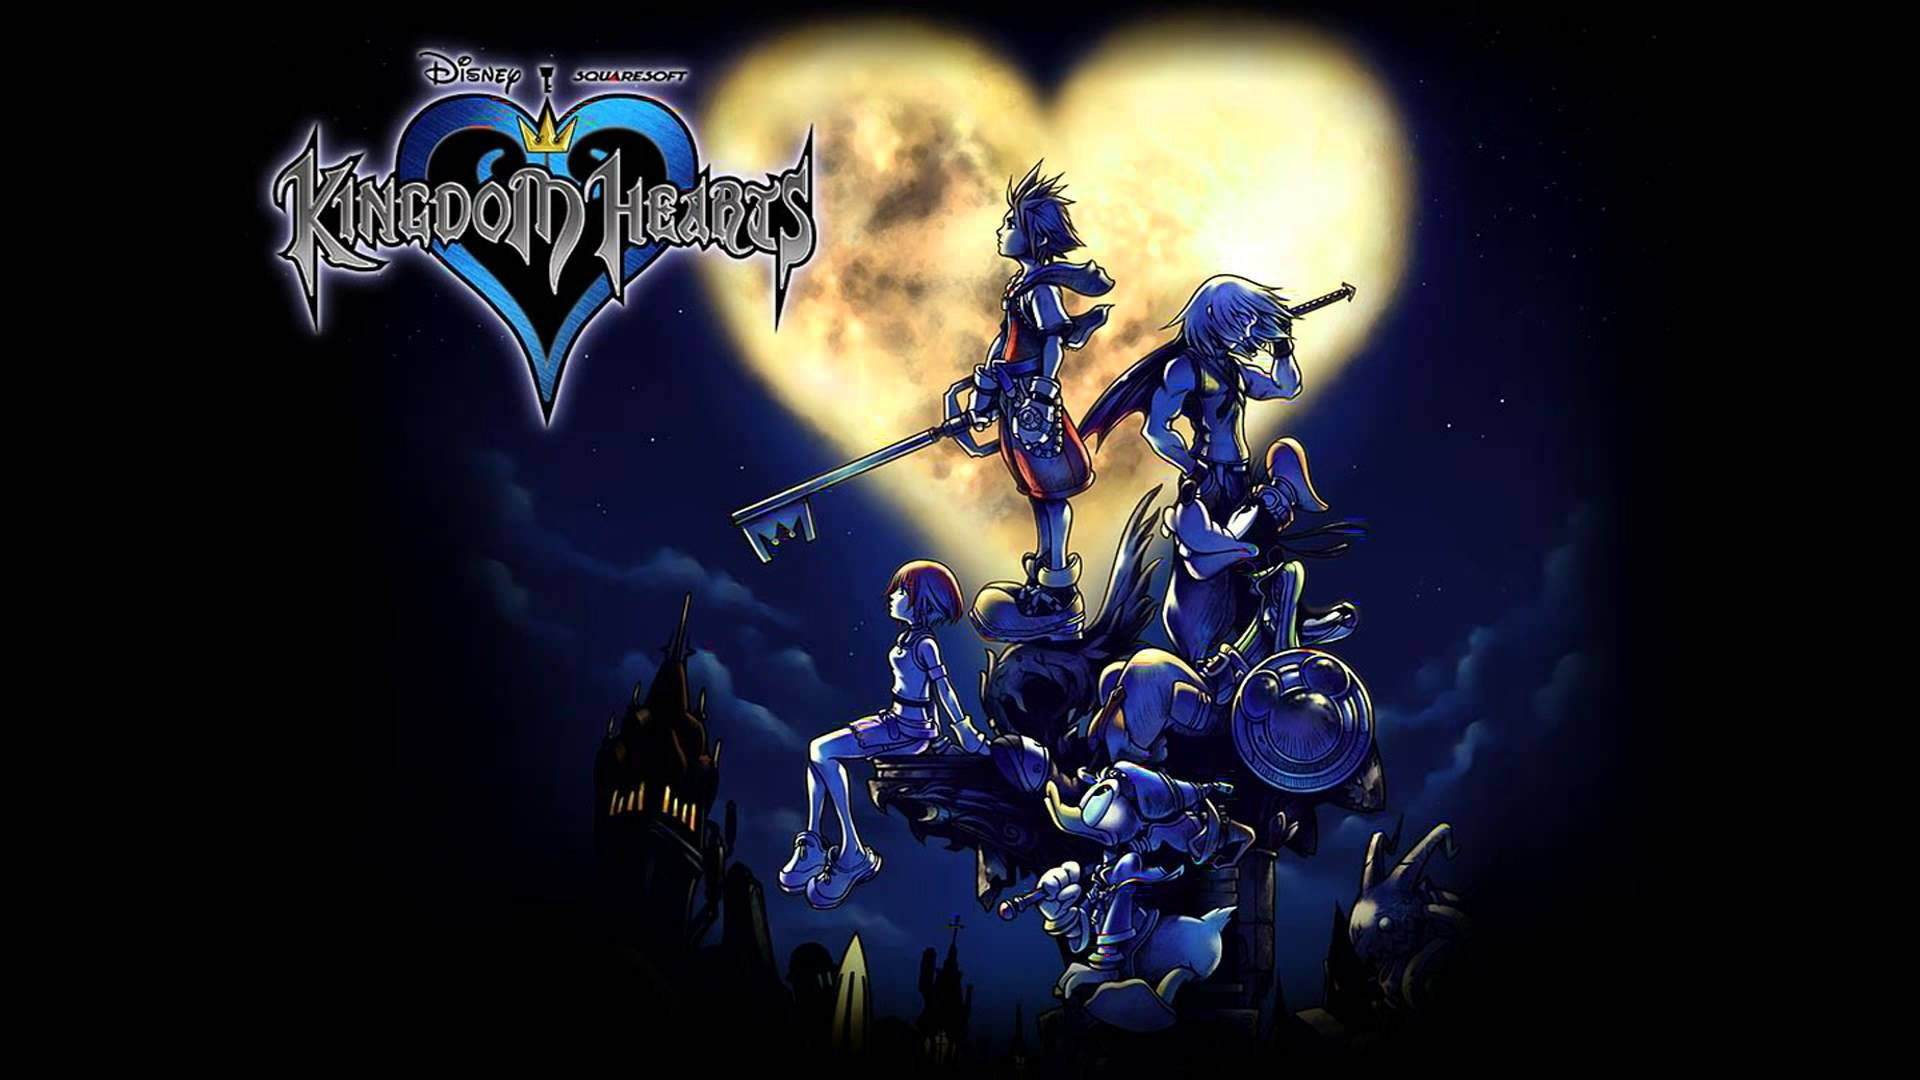 Digitalesposter Mit Dem Kingdom Hearts-logo Wallpaper